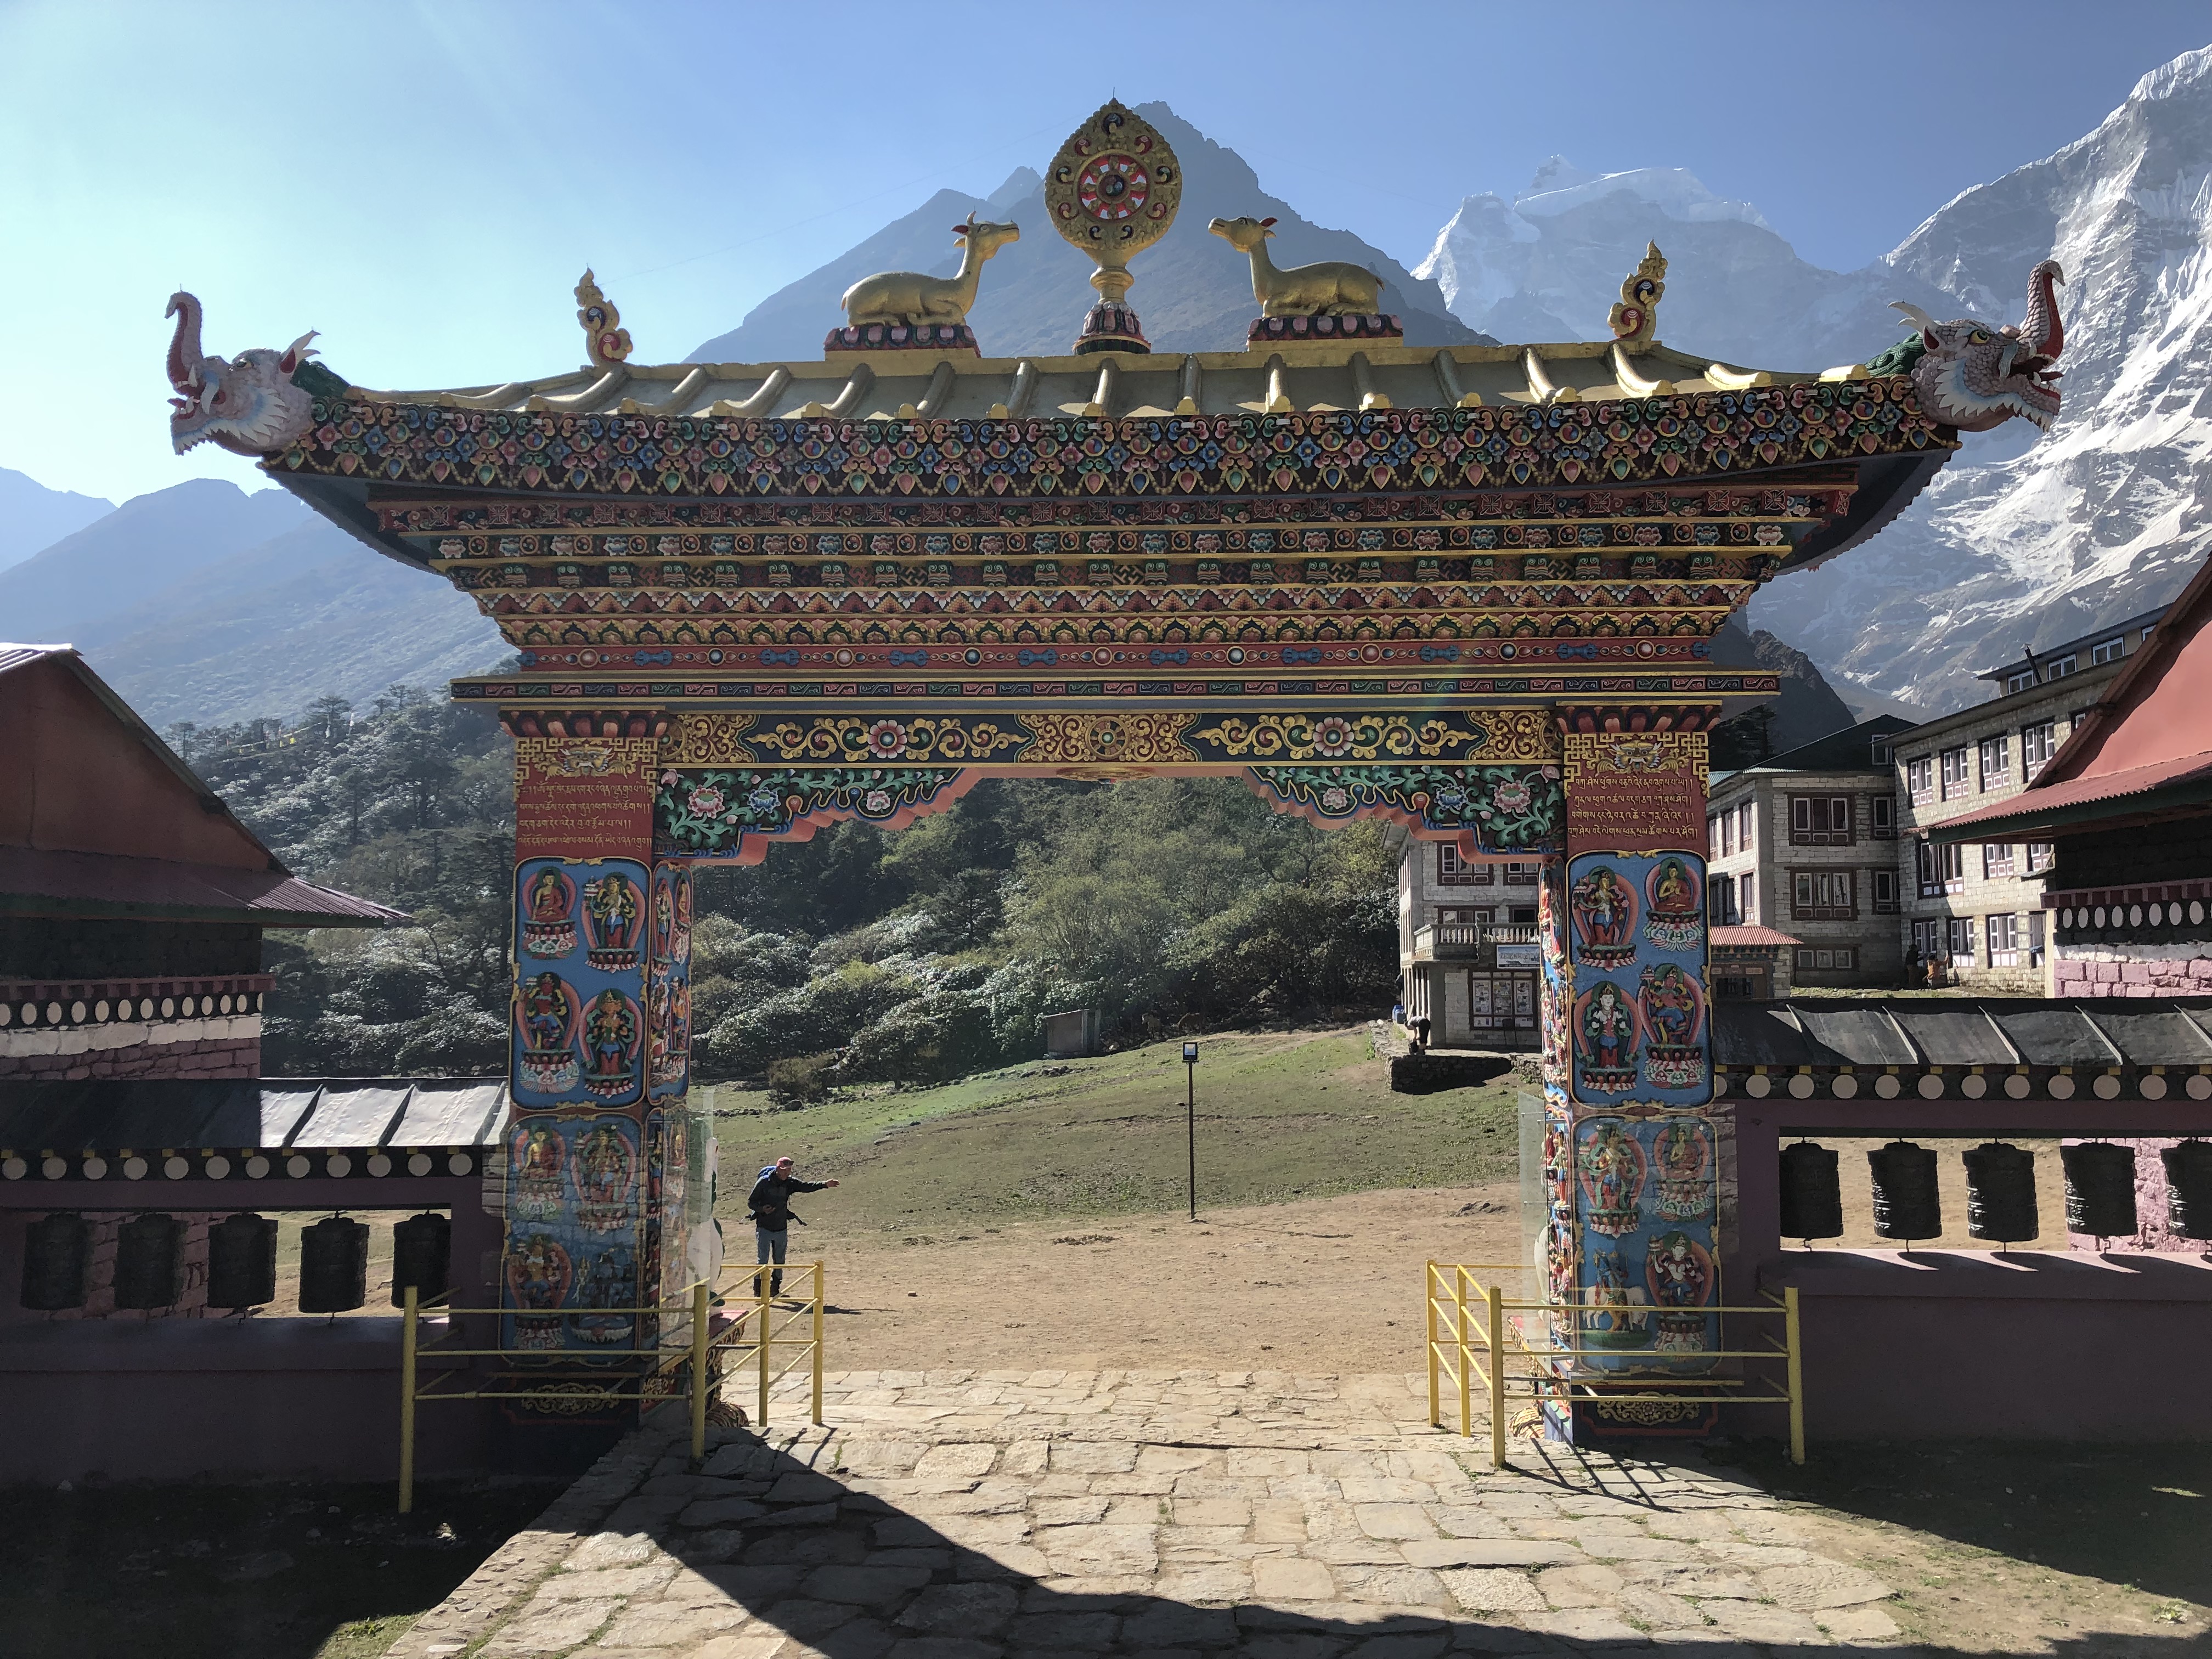 The colorful Tengbouche Monastery